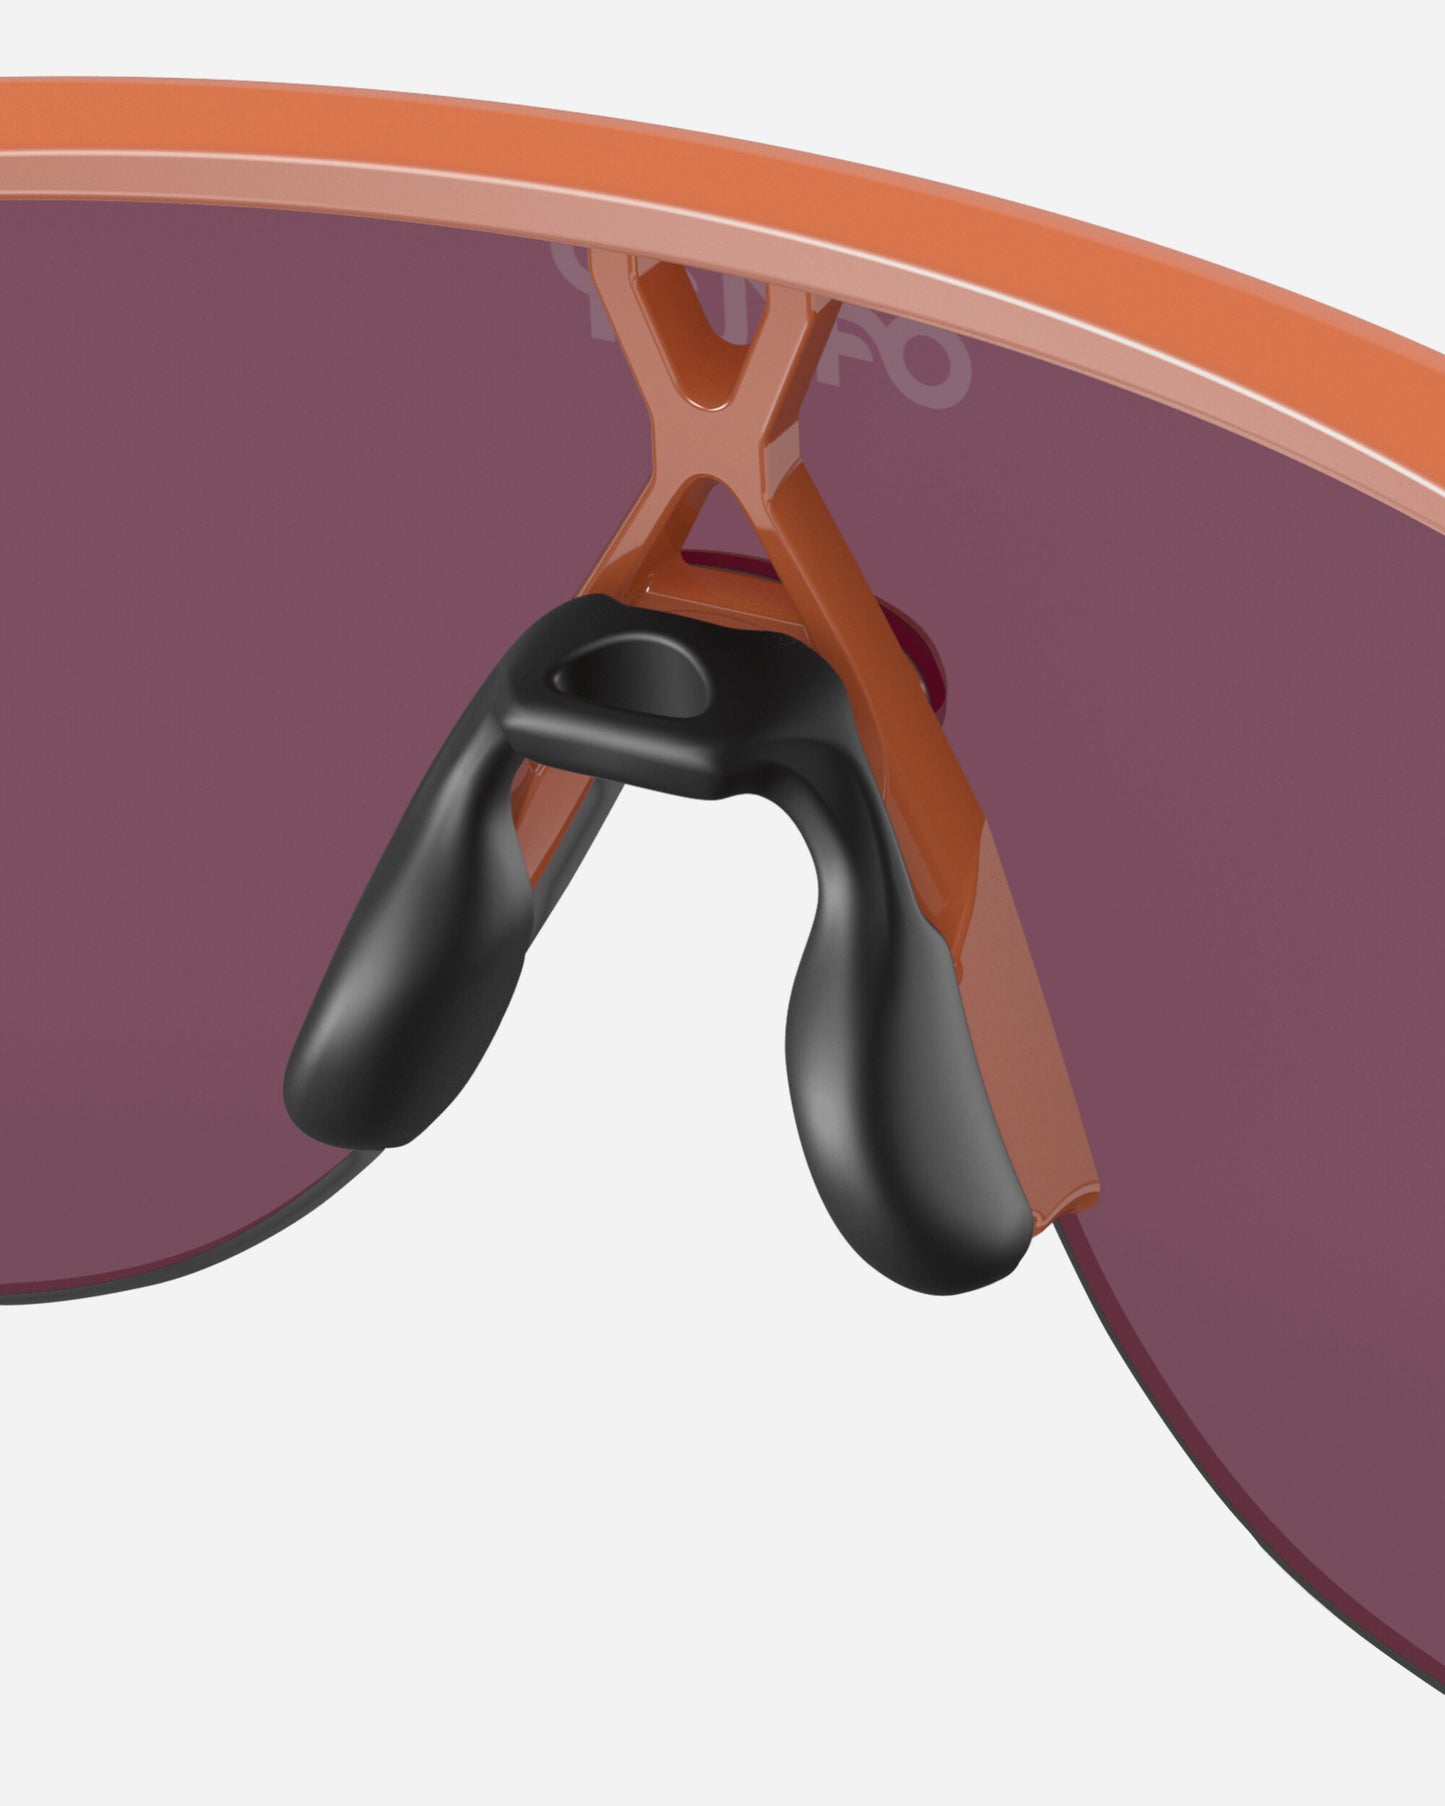 Oakley Corridor Matte Ginge Eyewear Sunglasses OO9248 13